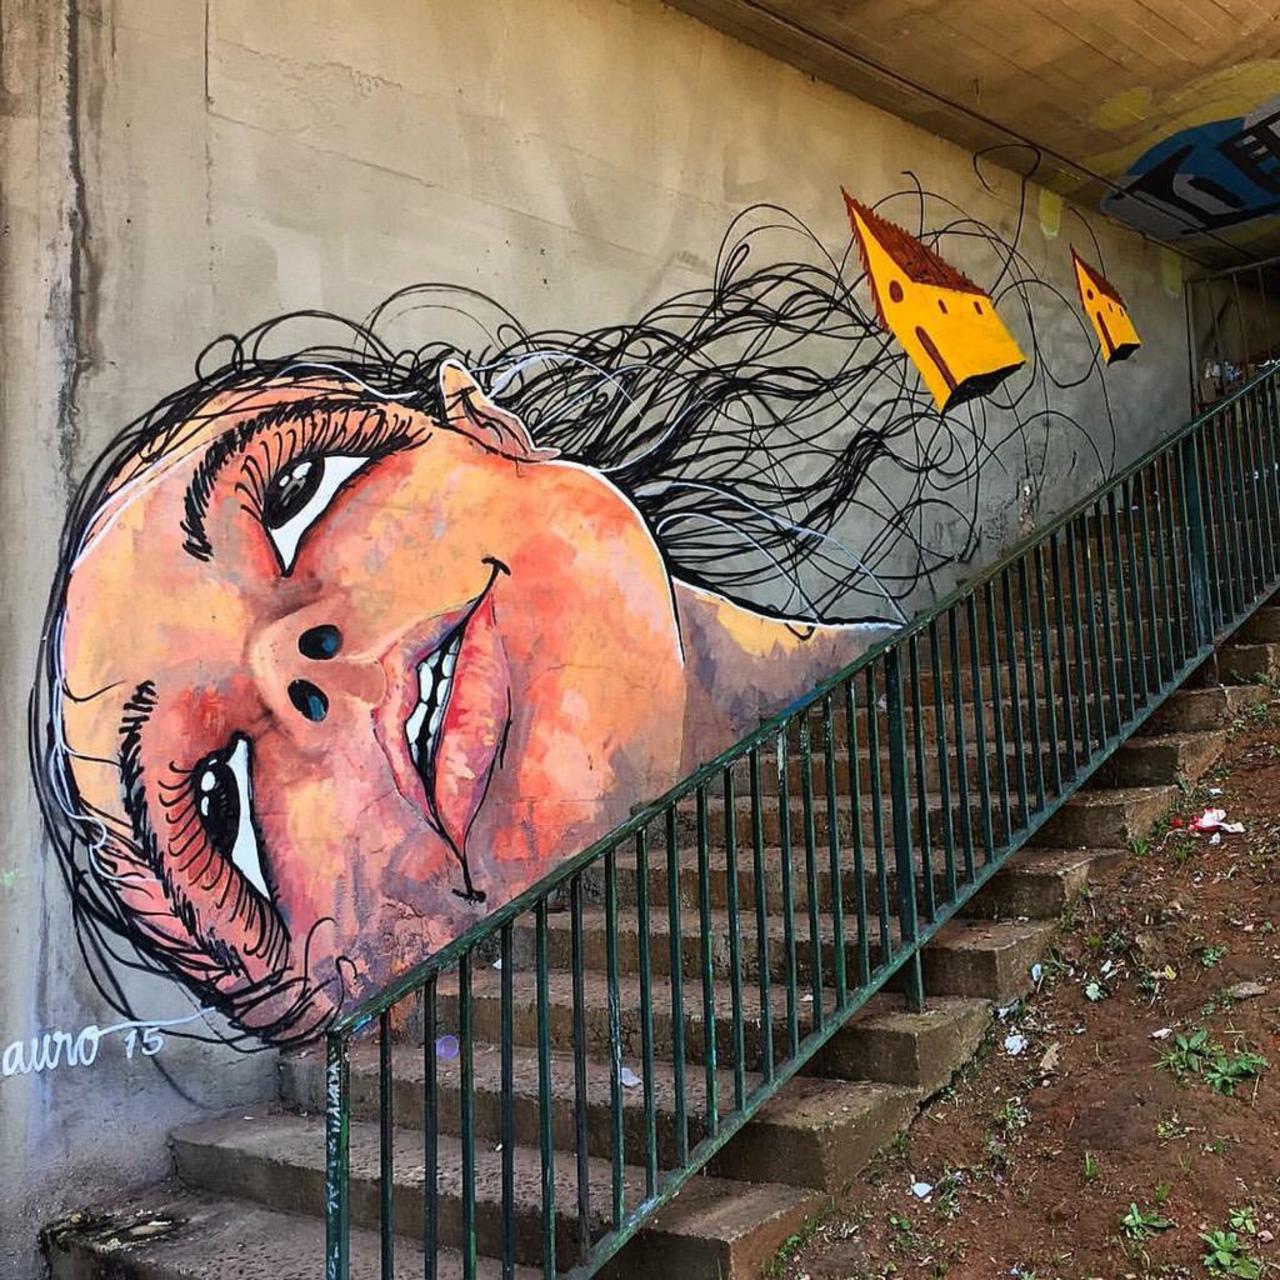 New tumblr post: "Street Art by Reveracidade in São Paulo 

#art #graffiti #mural #streetart http://t.co/OGC9lyWIfV" …